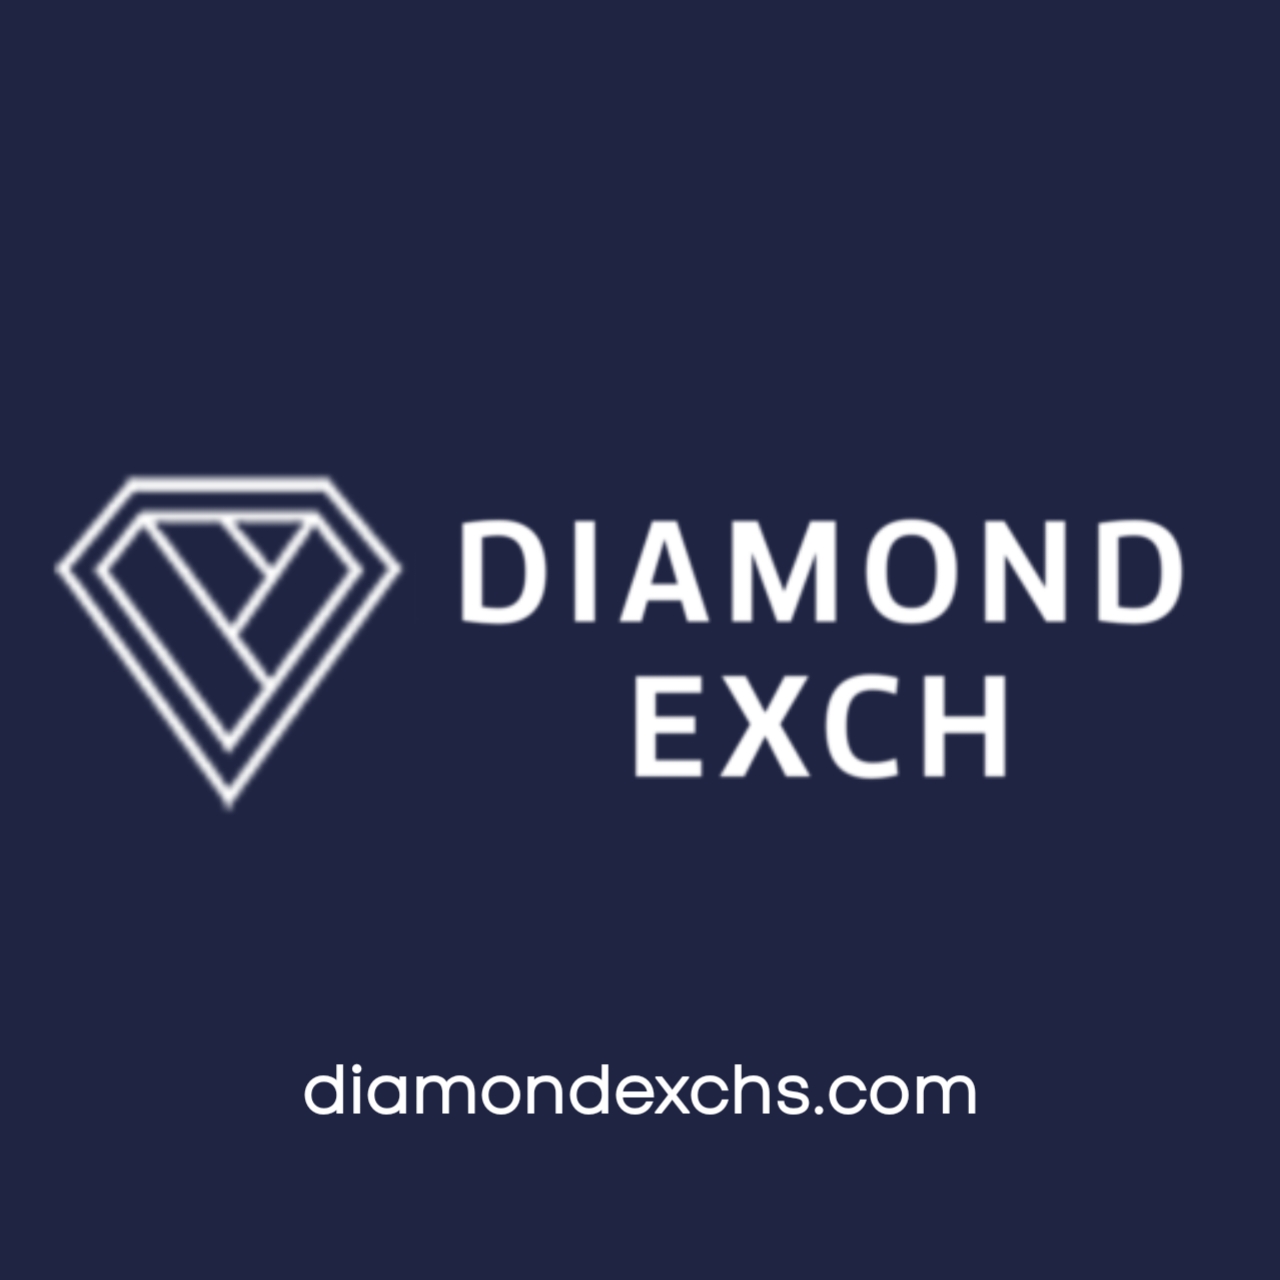 DiamondExch